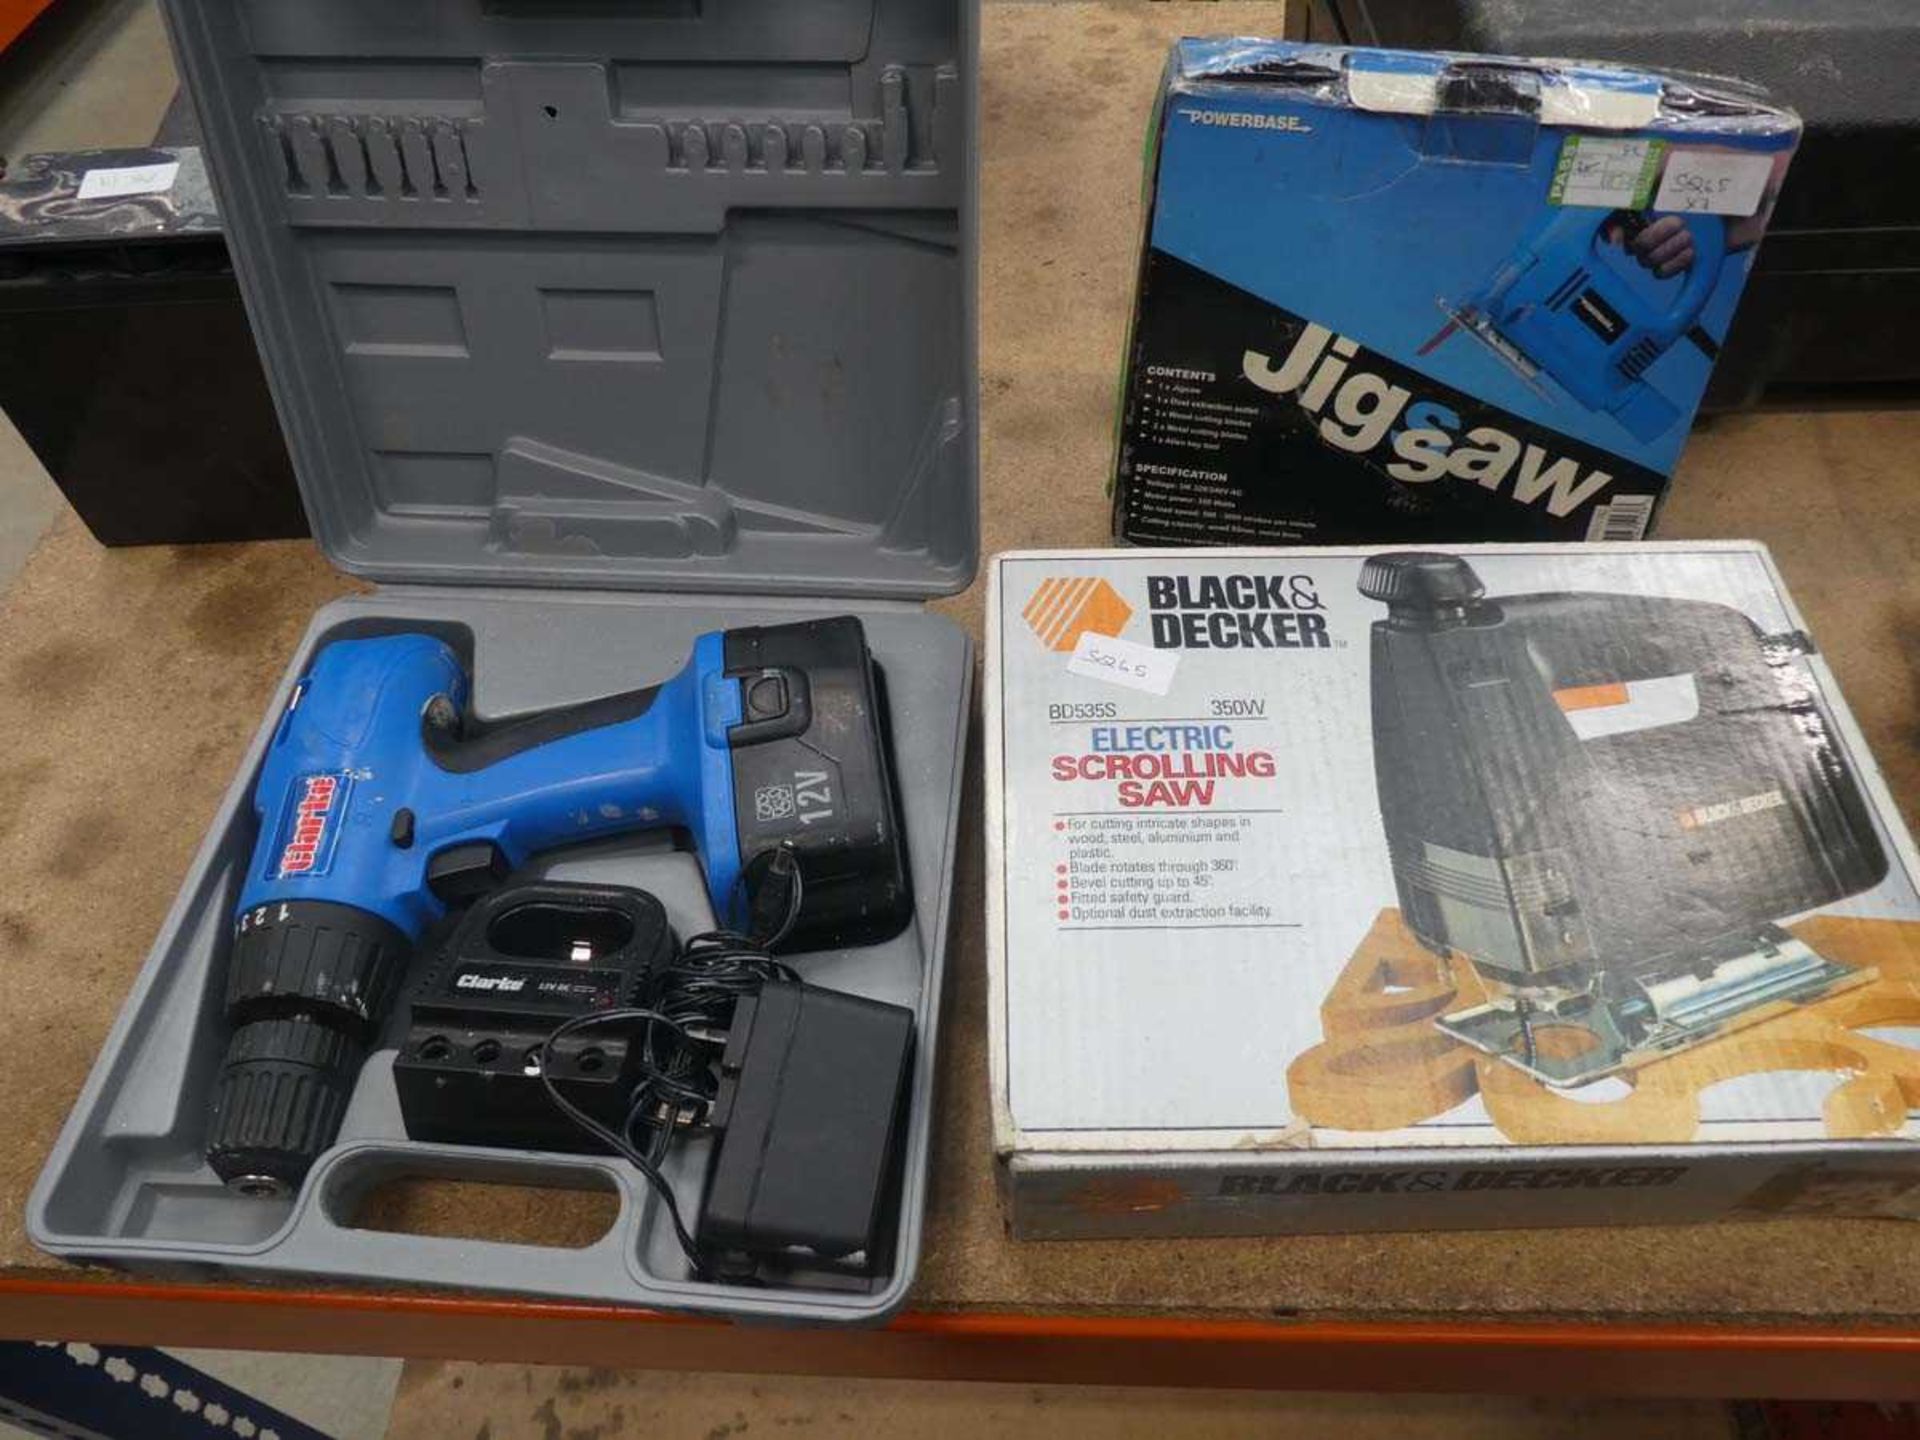 Clark battery drill, PowerBase jigsaw and a Black & Decker jigsaw